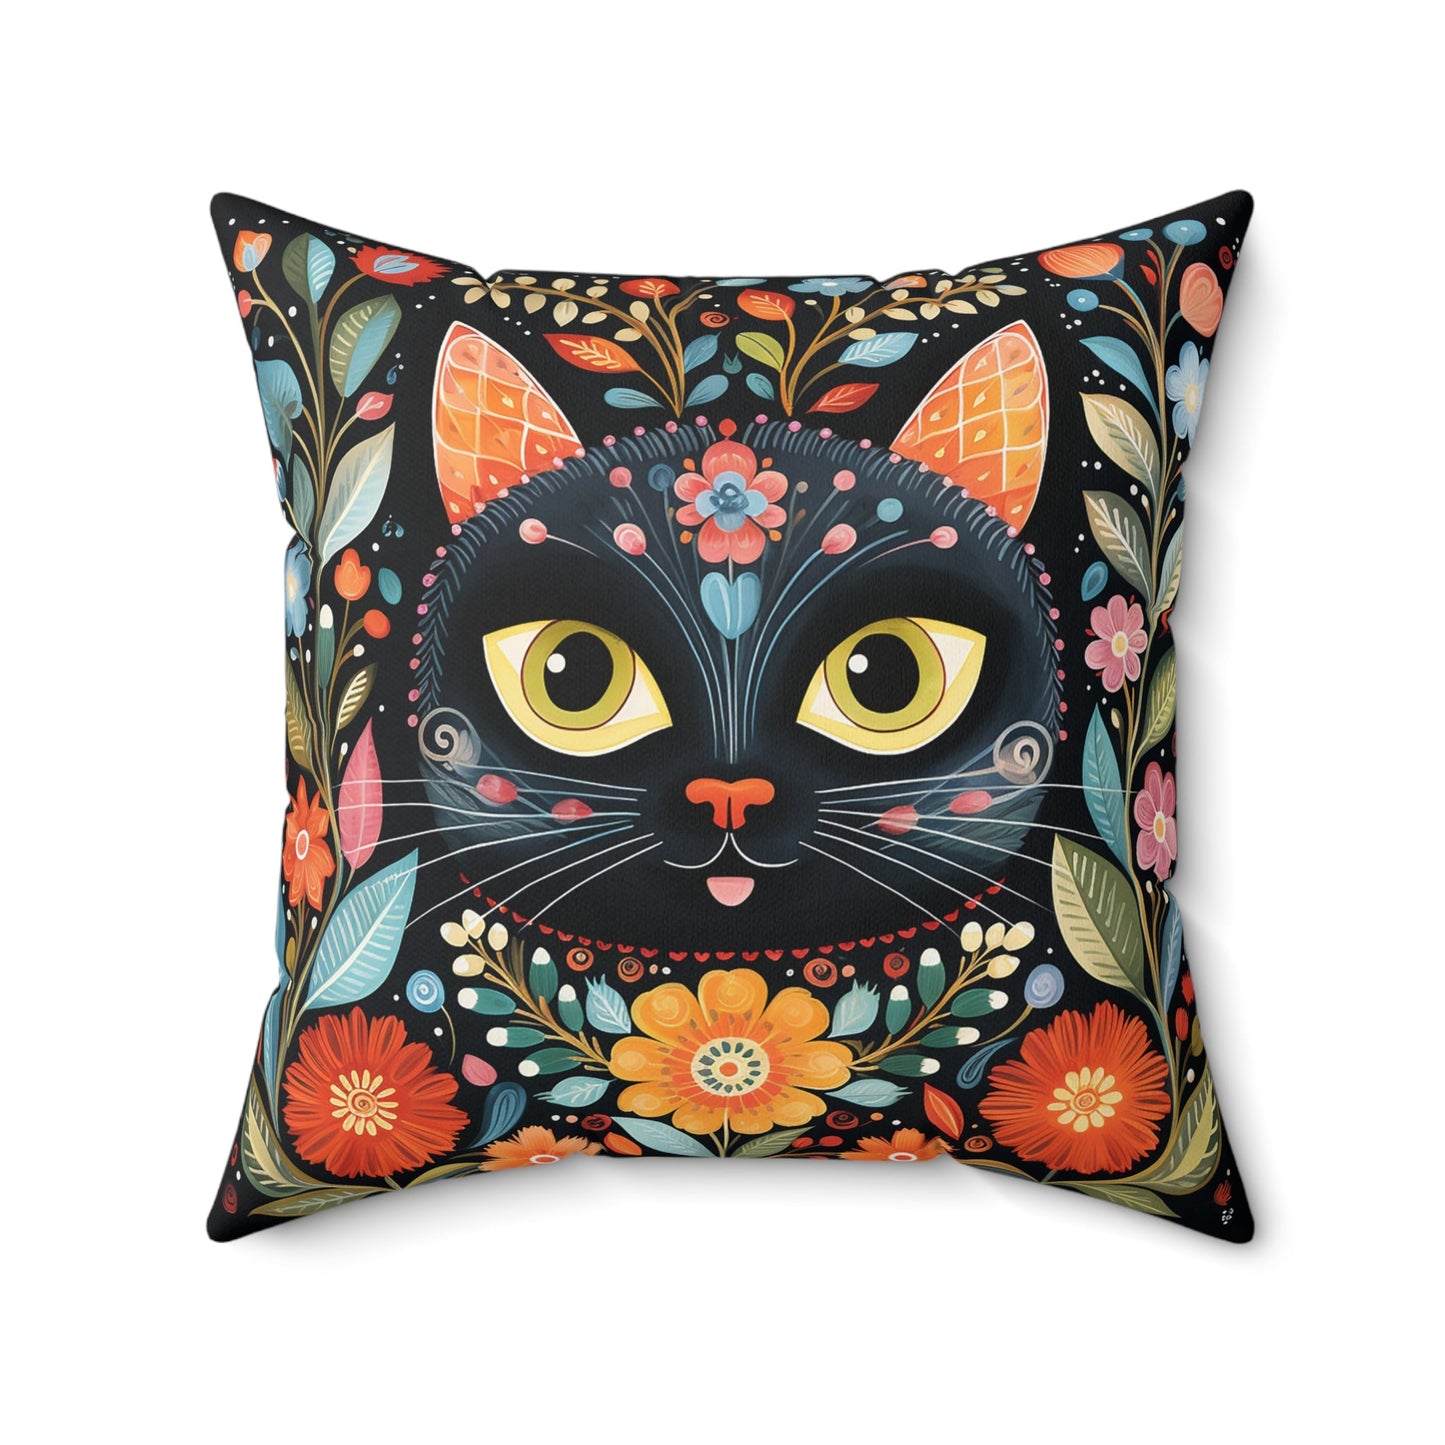 Boho Cat Pillow - Decorative Cat Boho Print Throw Pillow Cover 4 sizes, Bright Boho Decor, Vintage Folk Art, Gift for Artists, Accent Throw - FlooredByArt